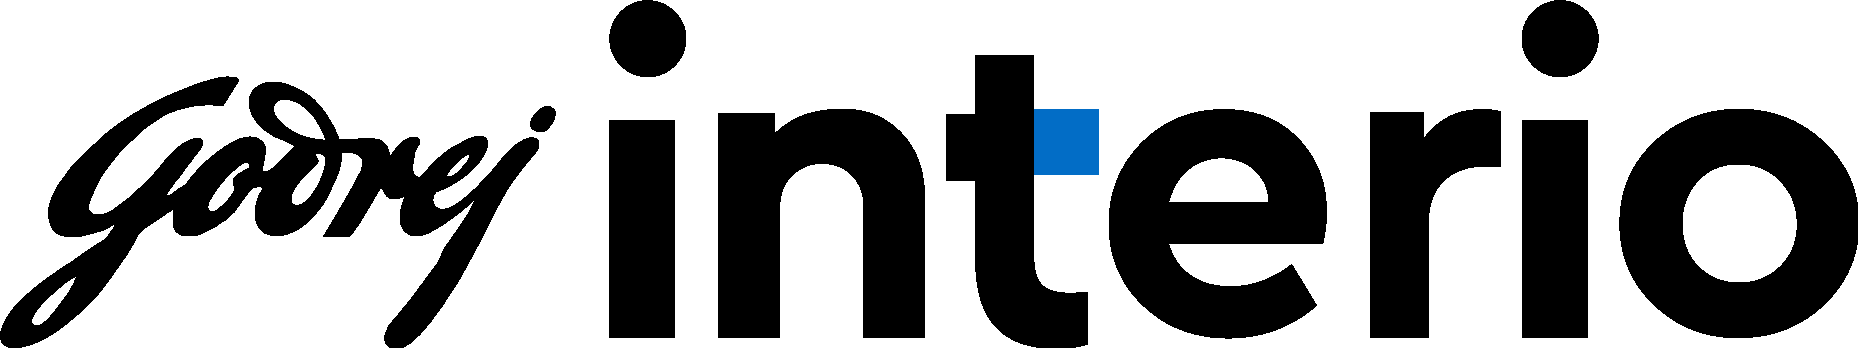 Godrej Group Logo Color Scheme » Blue » SchemeColor.com